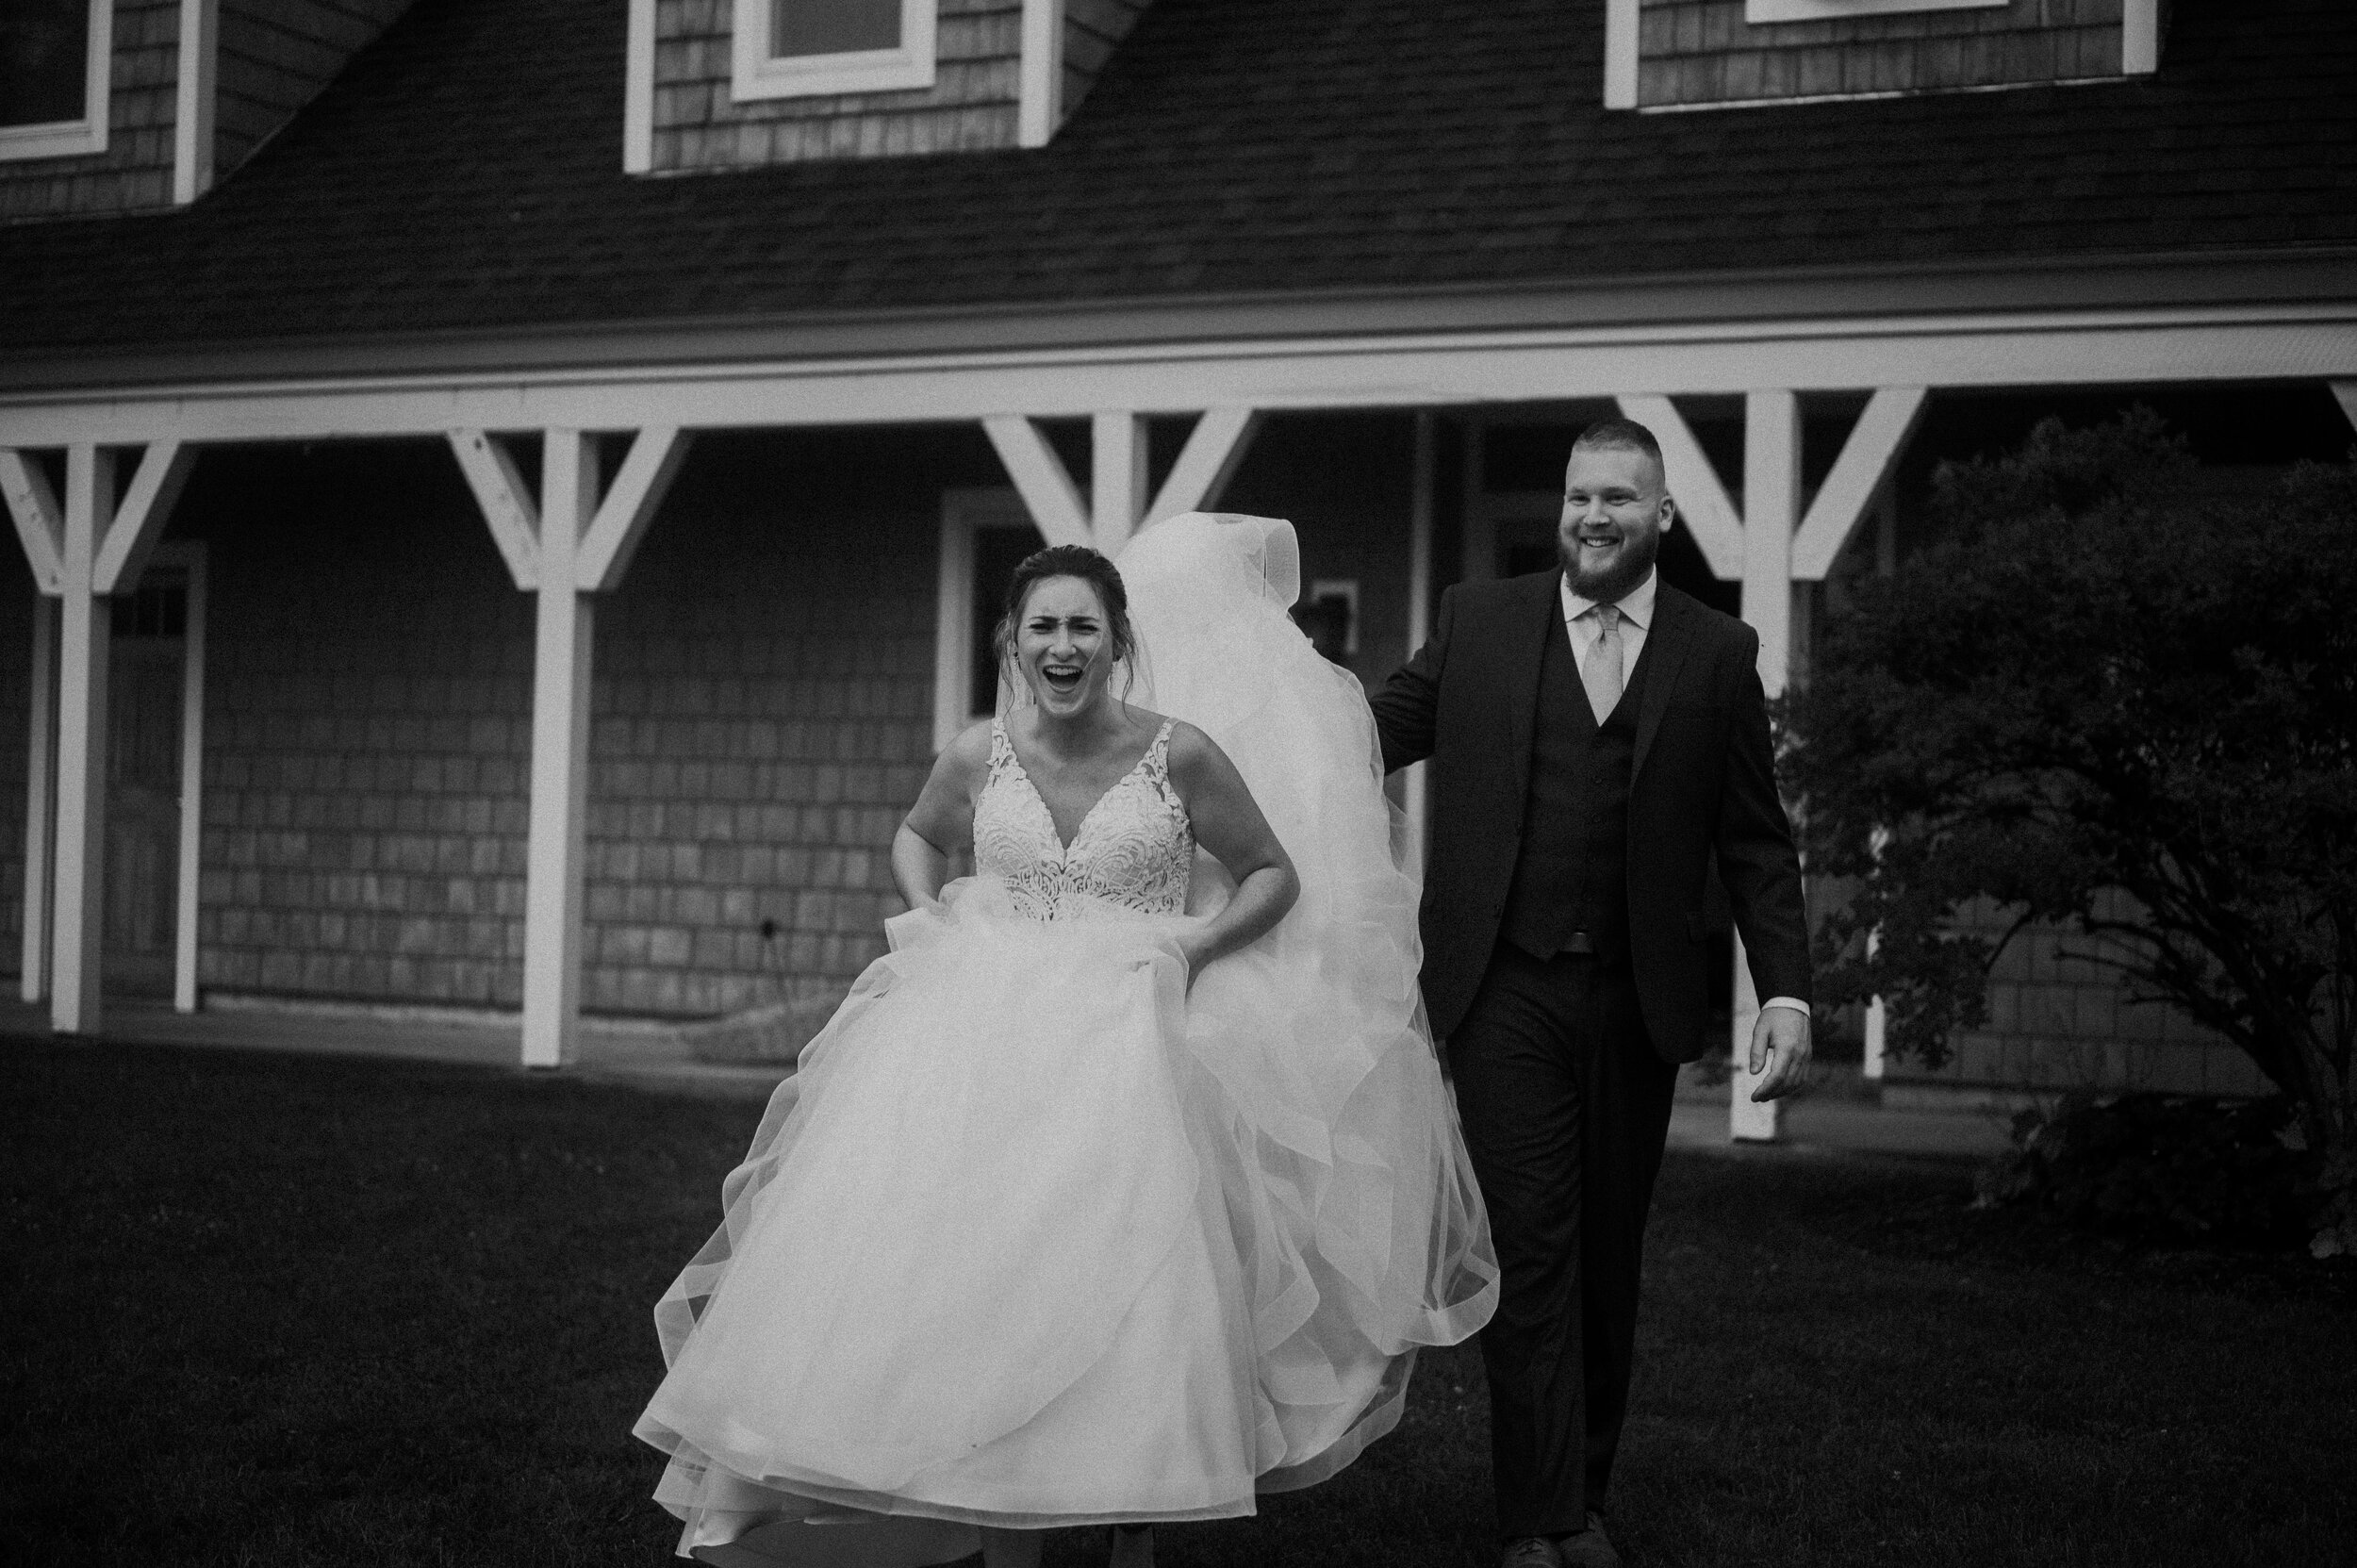 Stowe Vermont wedding photographer. Stowe Vermont elopement photographer. Woodstock Vermont wedding photographer 